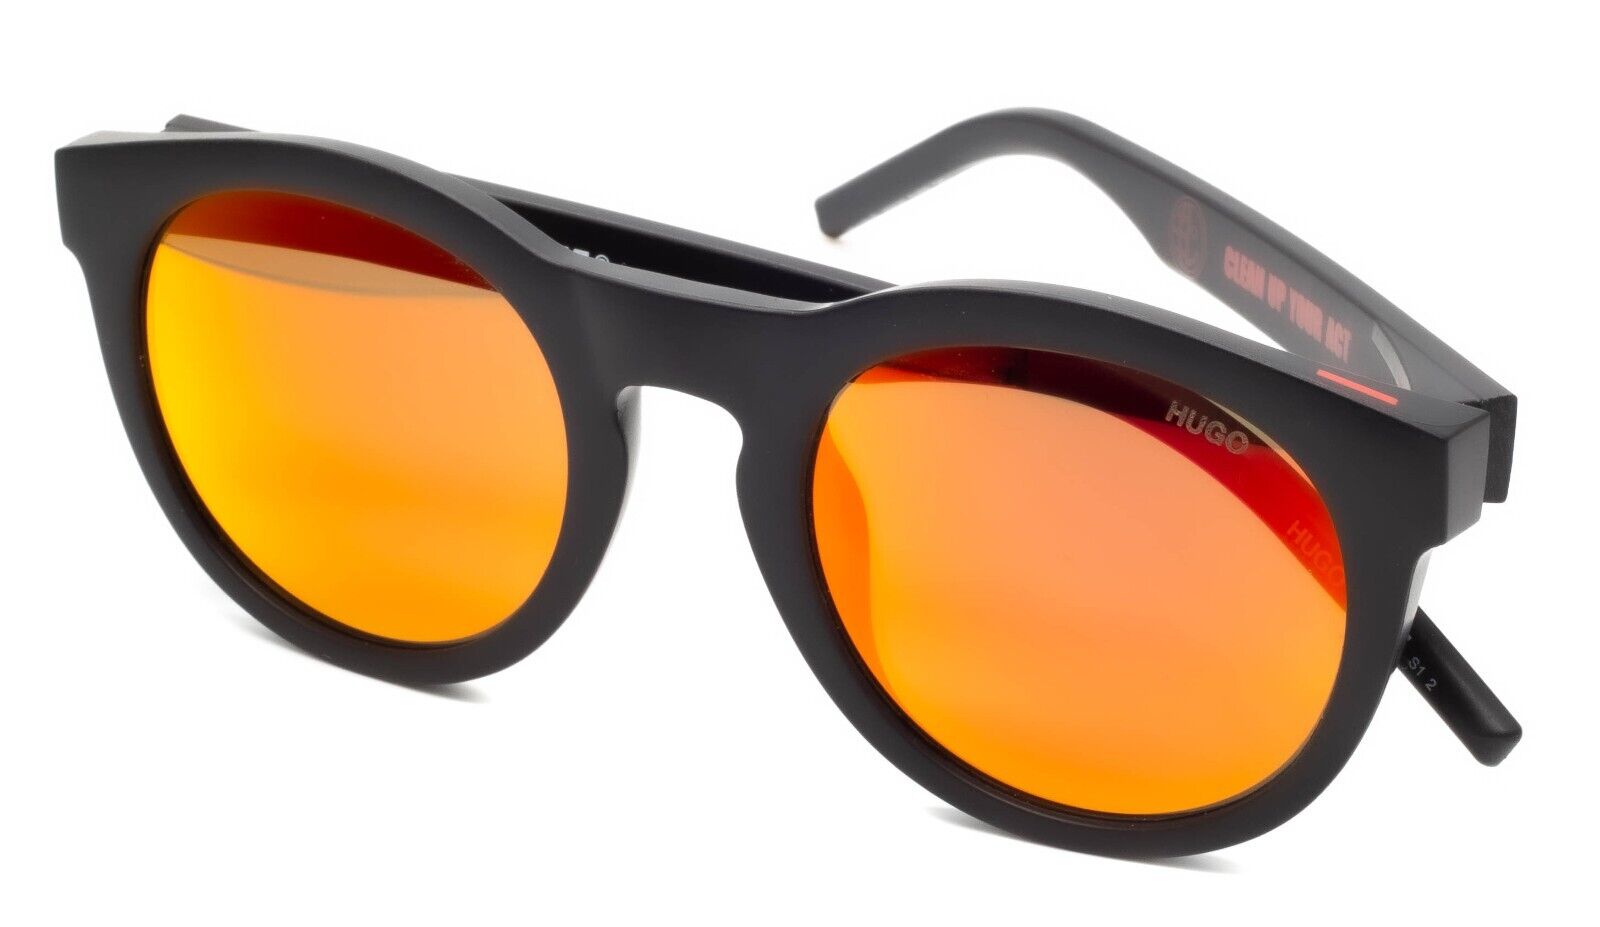 HUGO BOSS HG 1151/S 51mm Sunglasses Shades Eyewear Frames New BNIB - Italy - GGV Eyewear